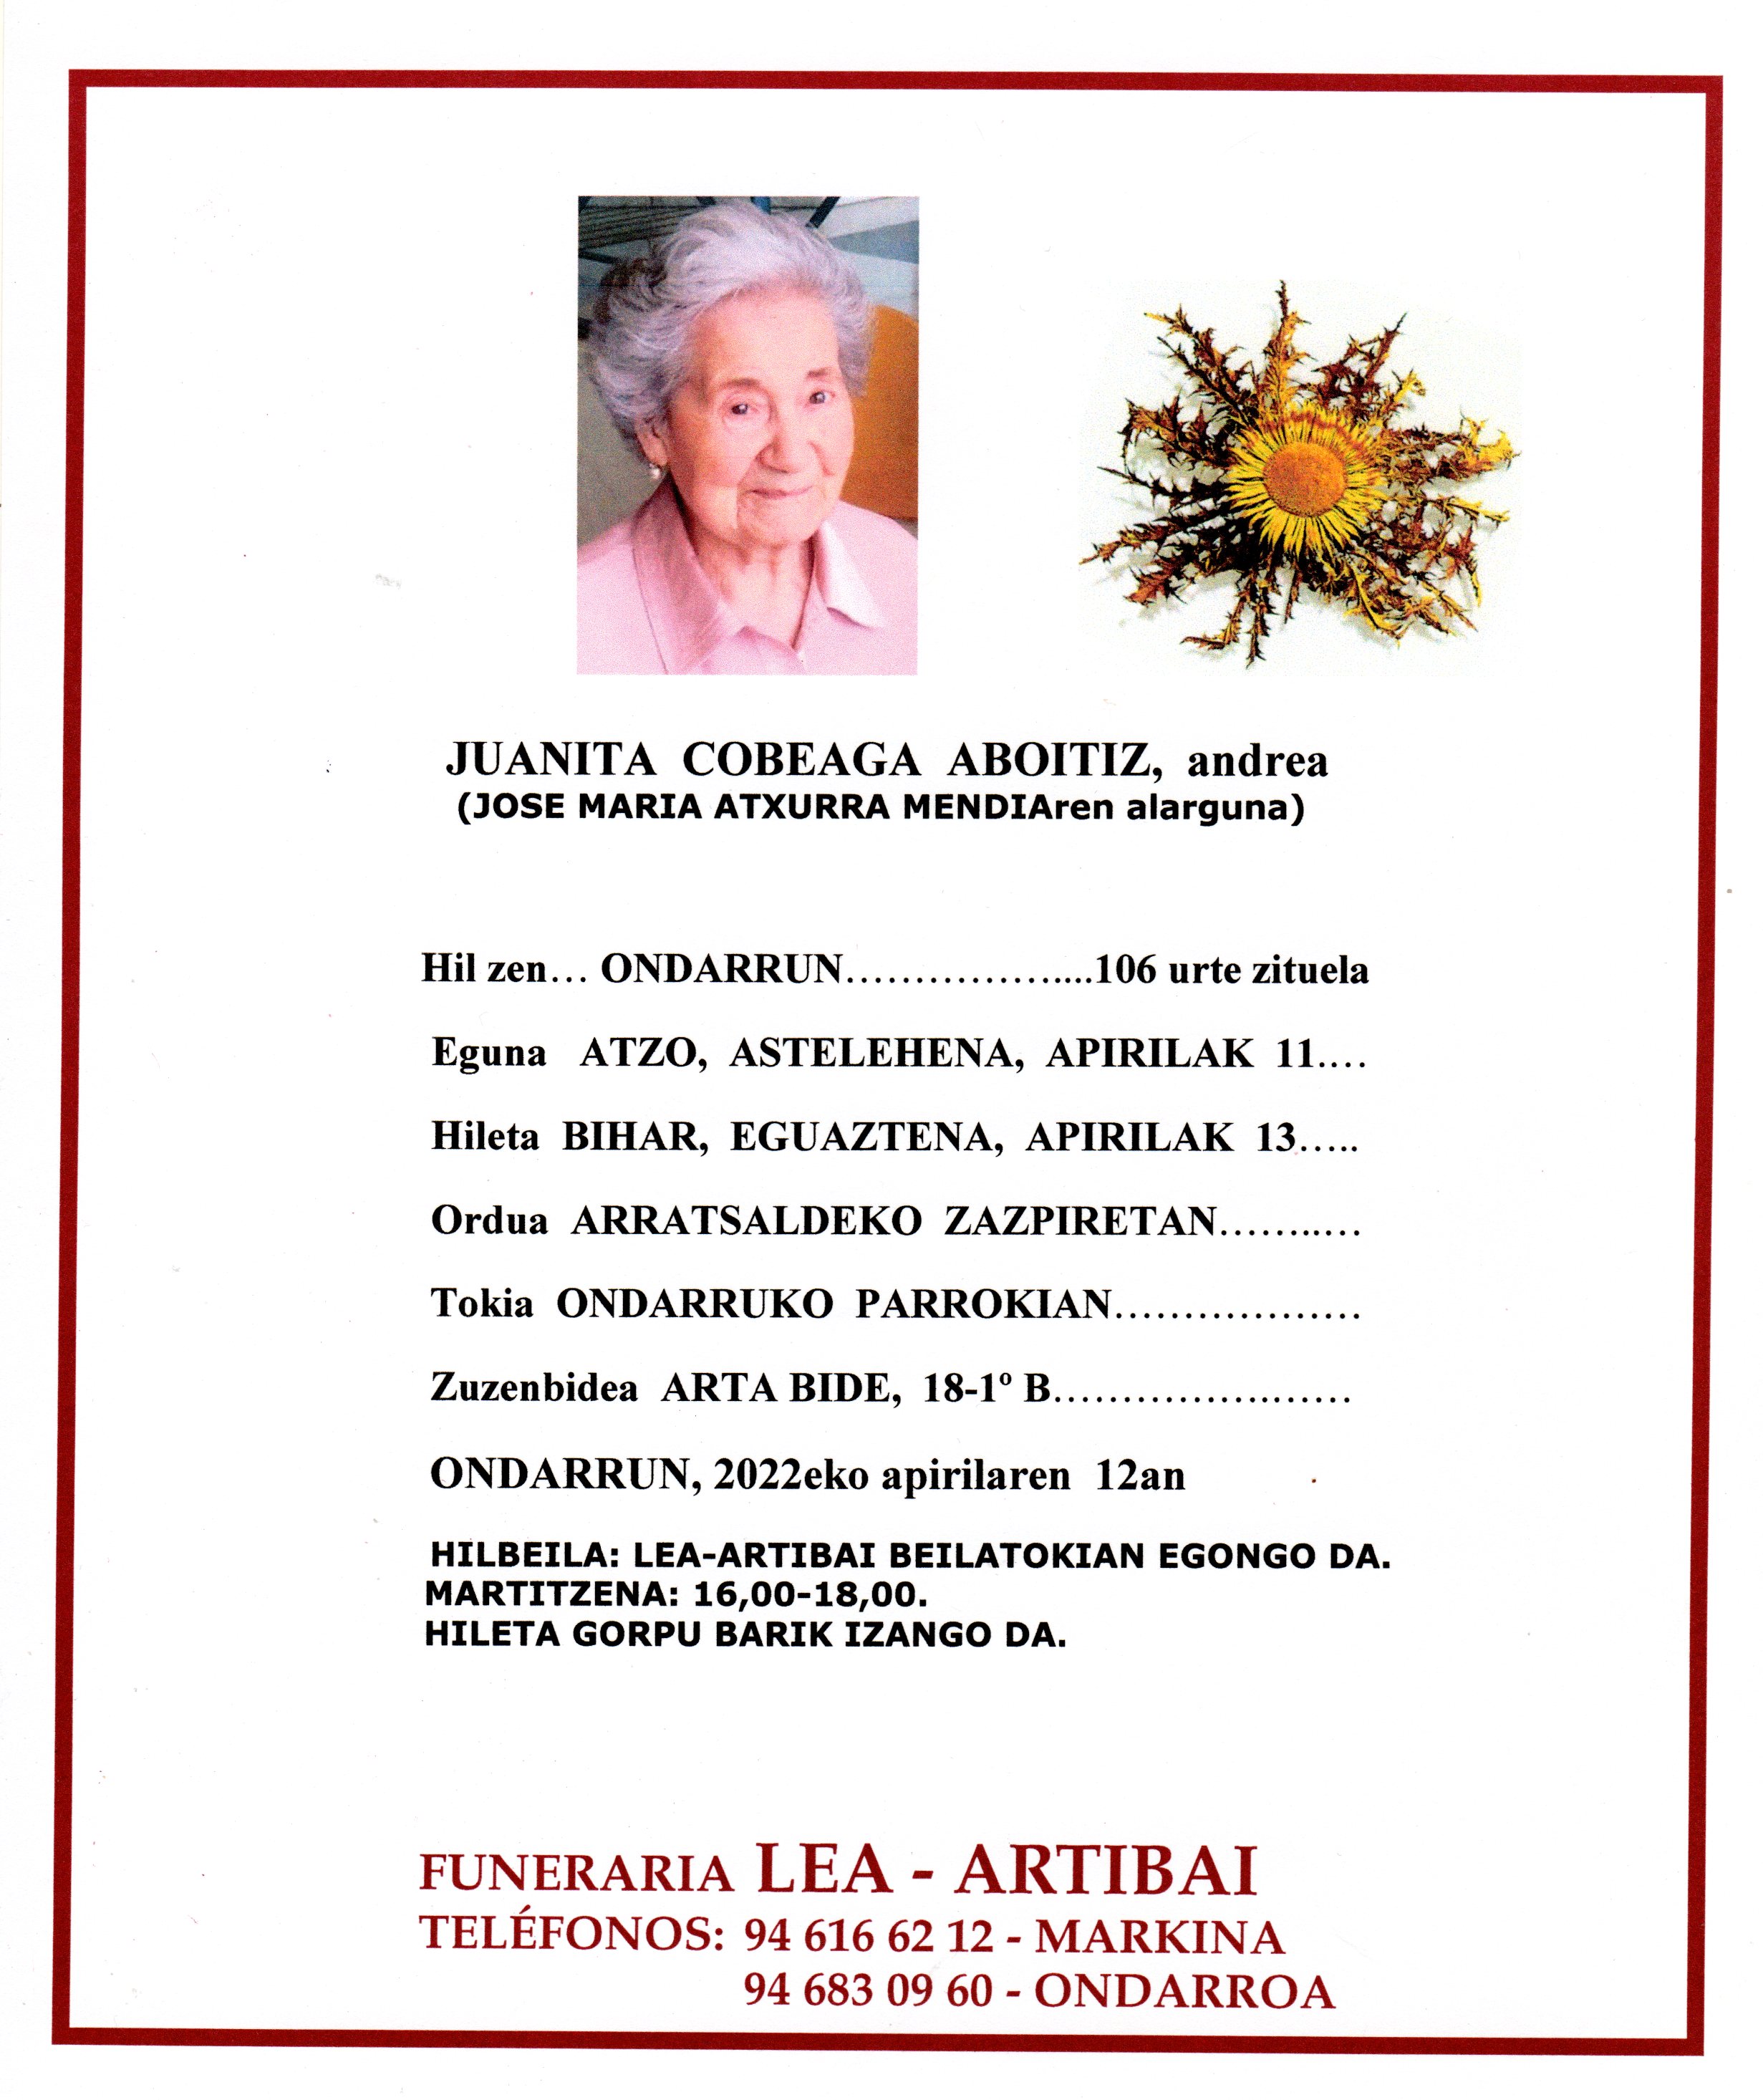 Juanita Cobeaga Aboitiz